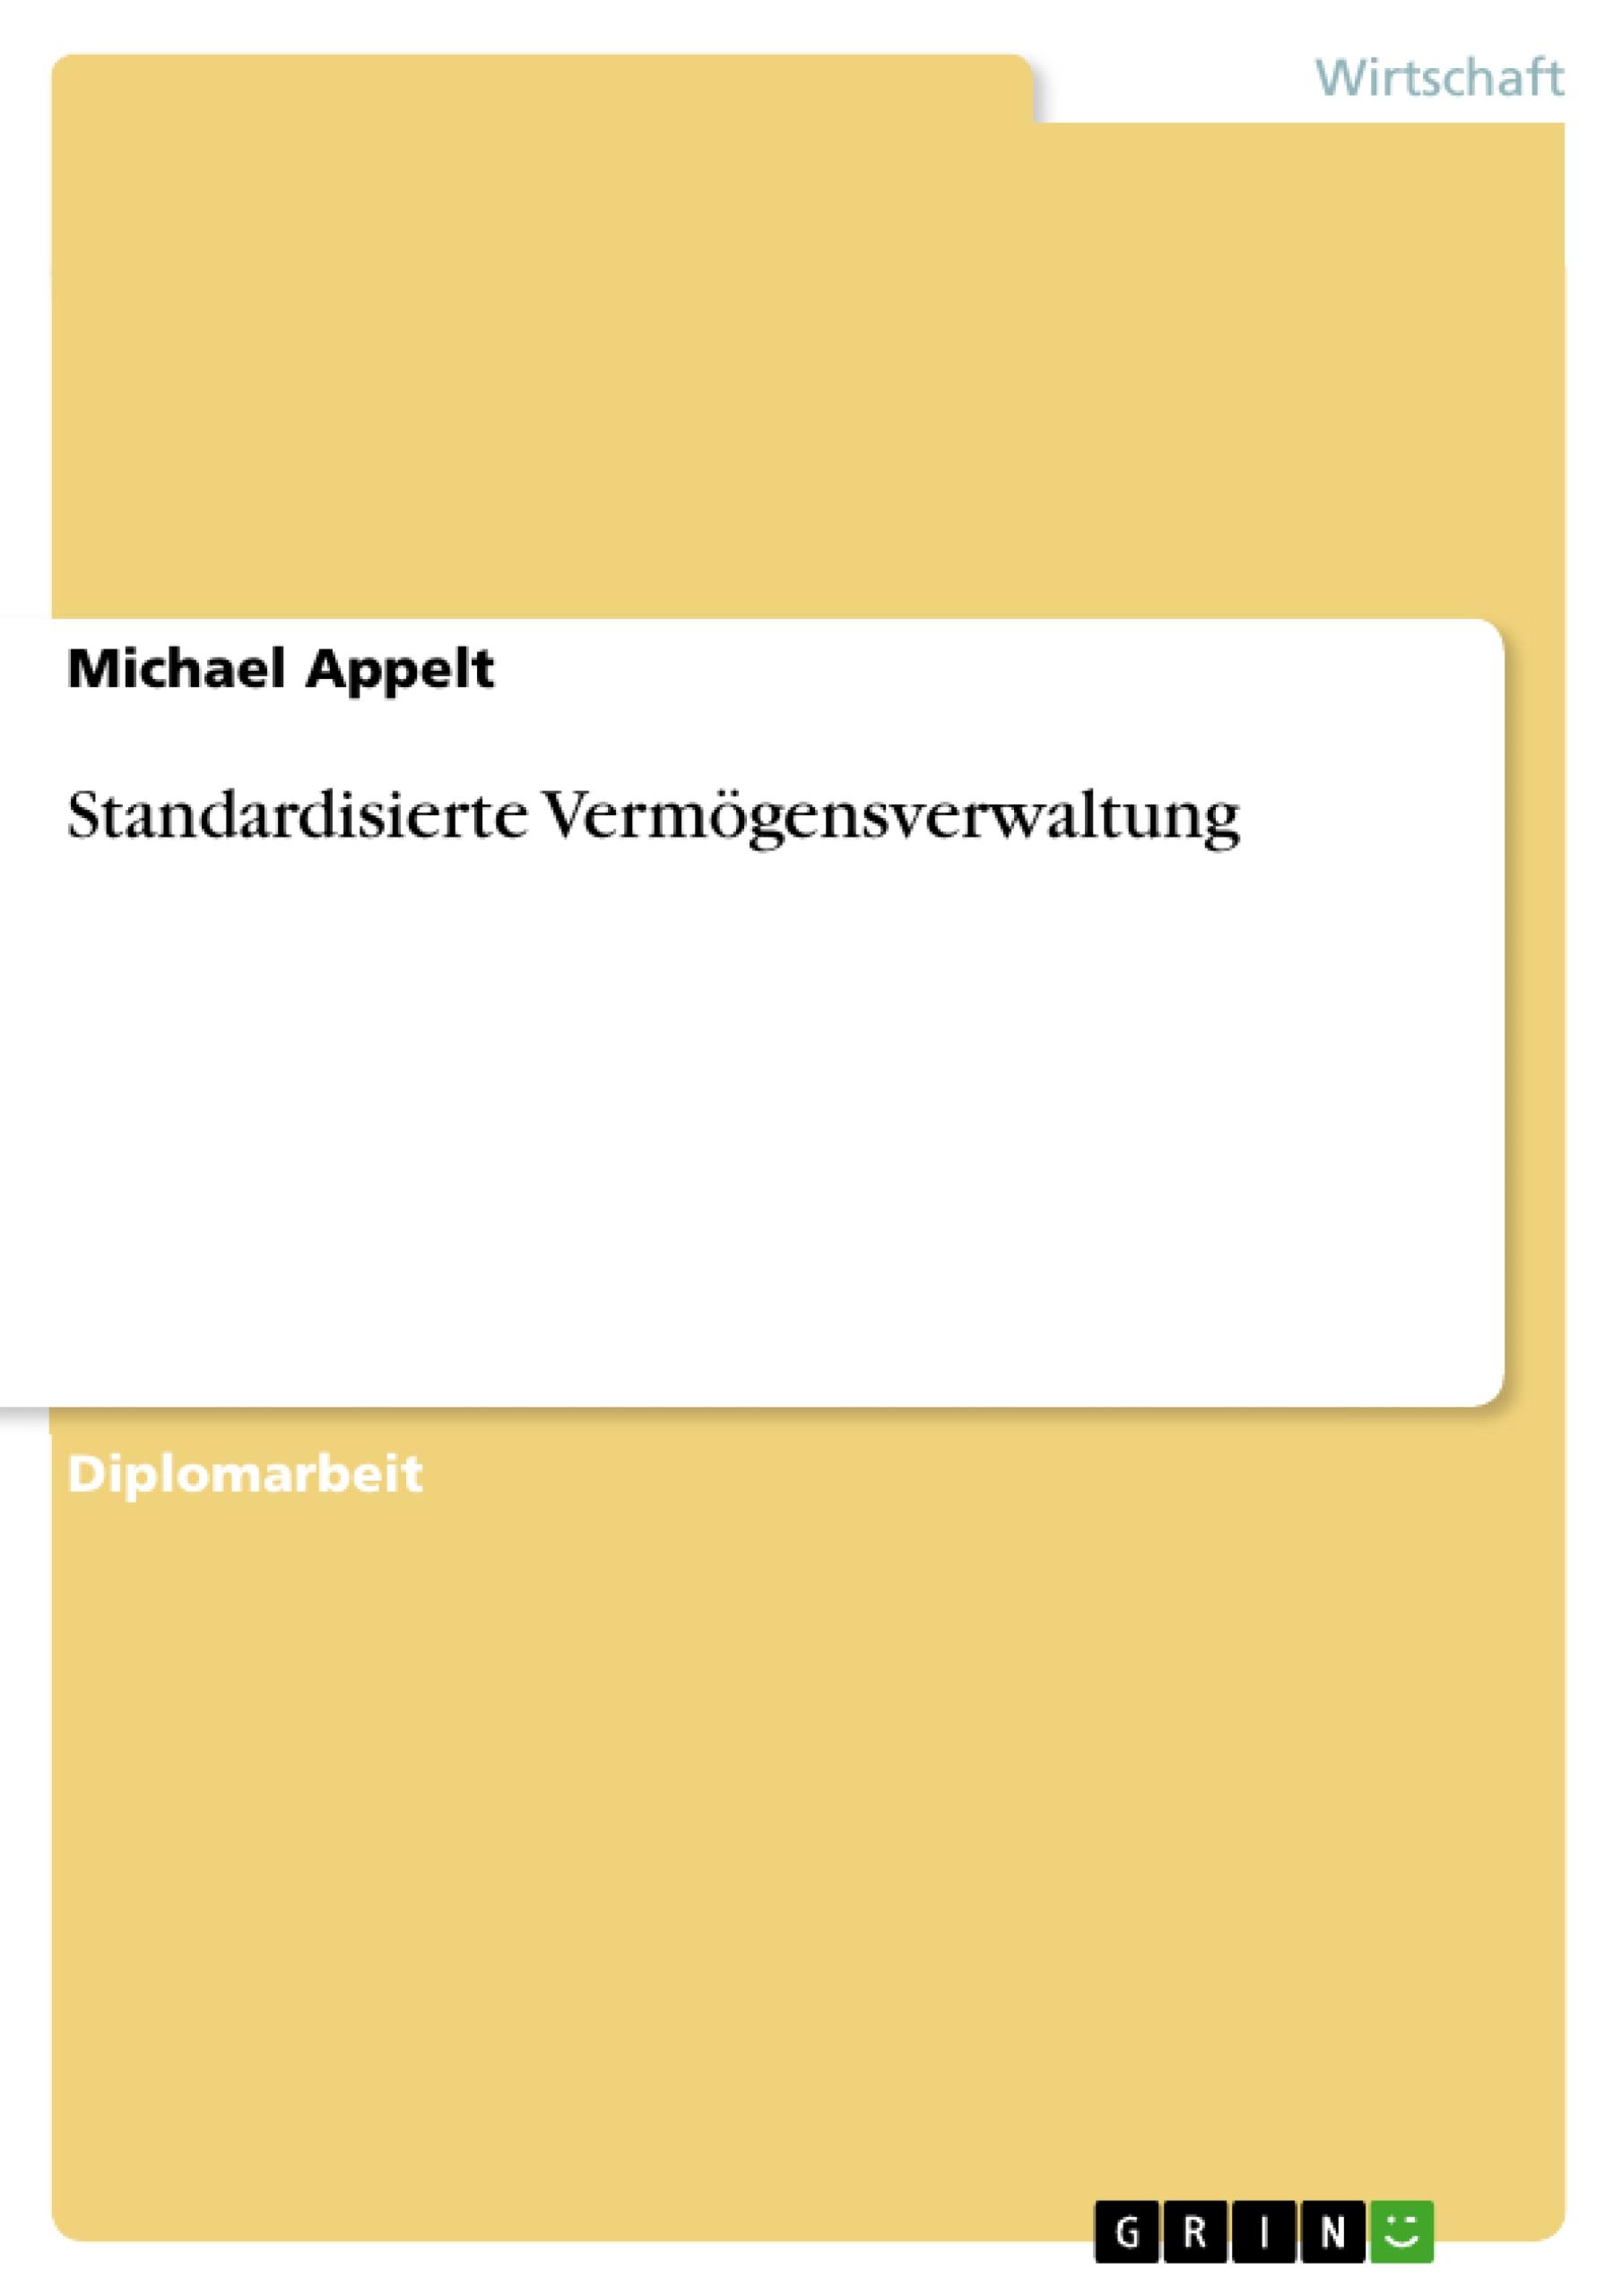 Standardisierte Vermoegensverwaltung - Appelt, Michael